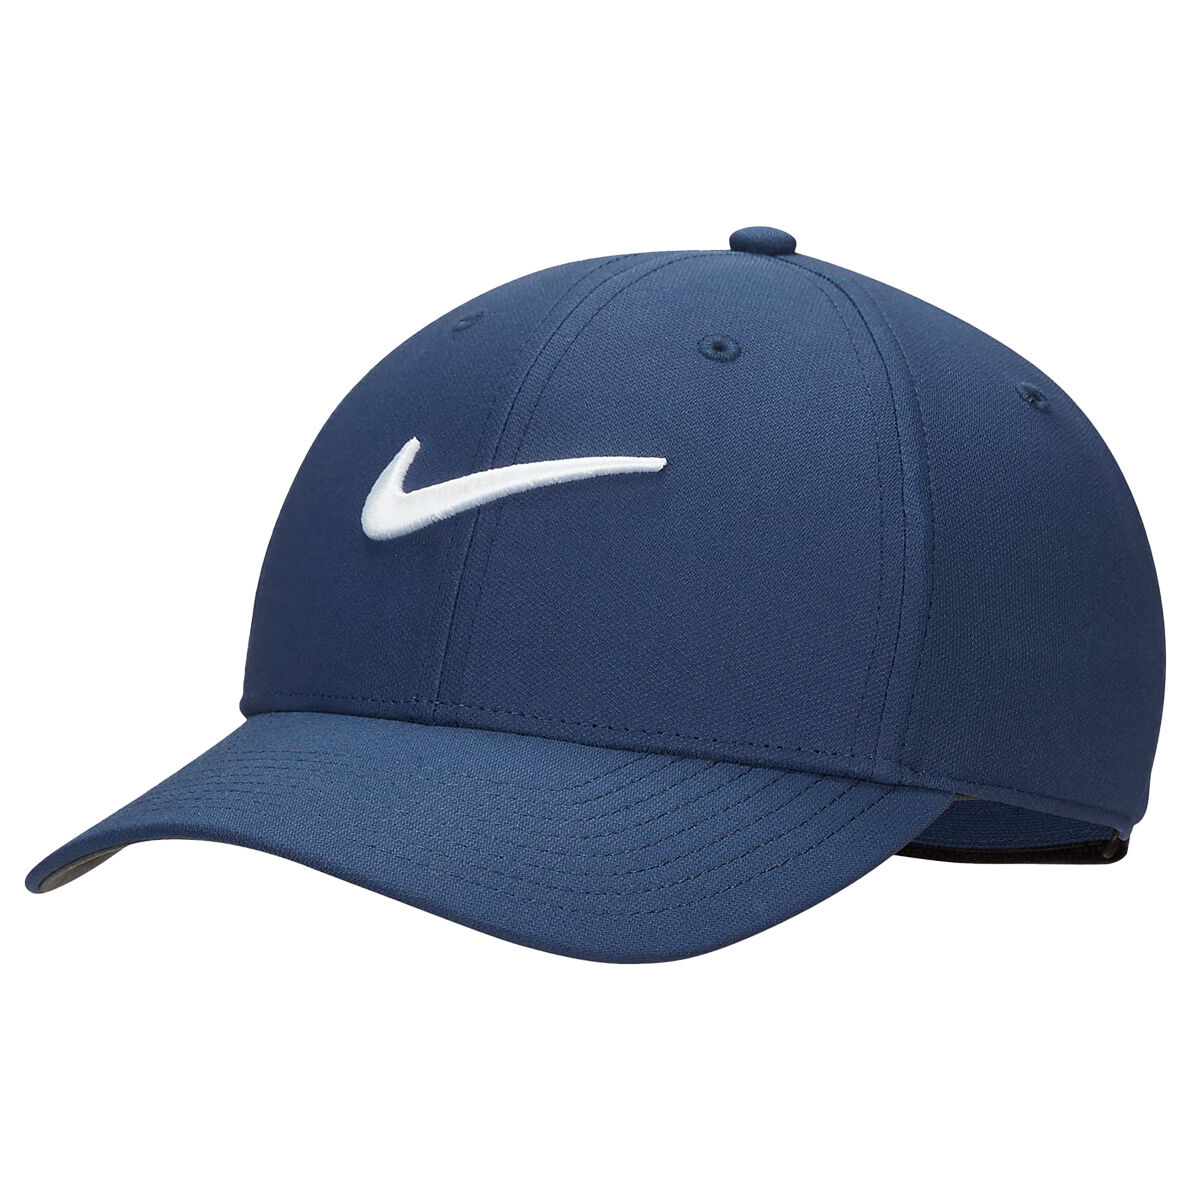 Nike Men’s Structured Swoosh Golf Cap, Mens, Midnight navy/white, Large/xl | American Golf